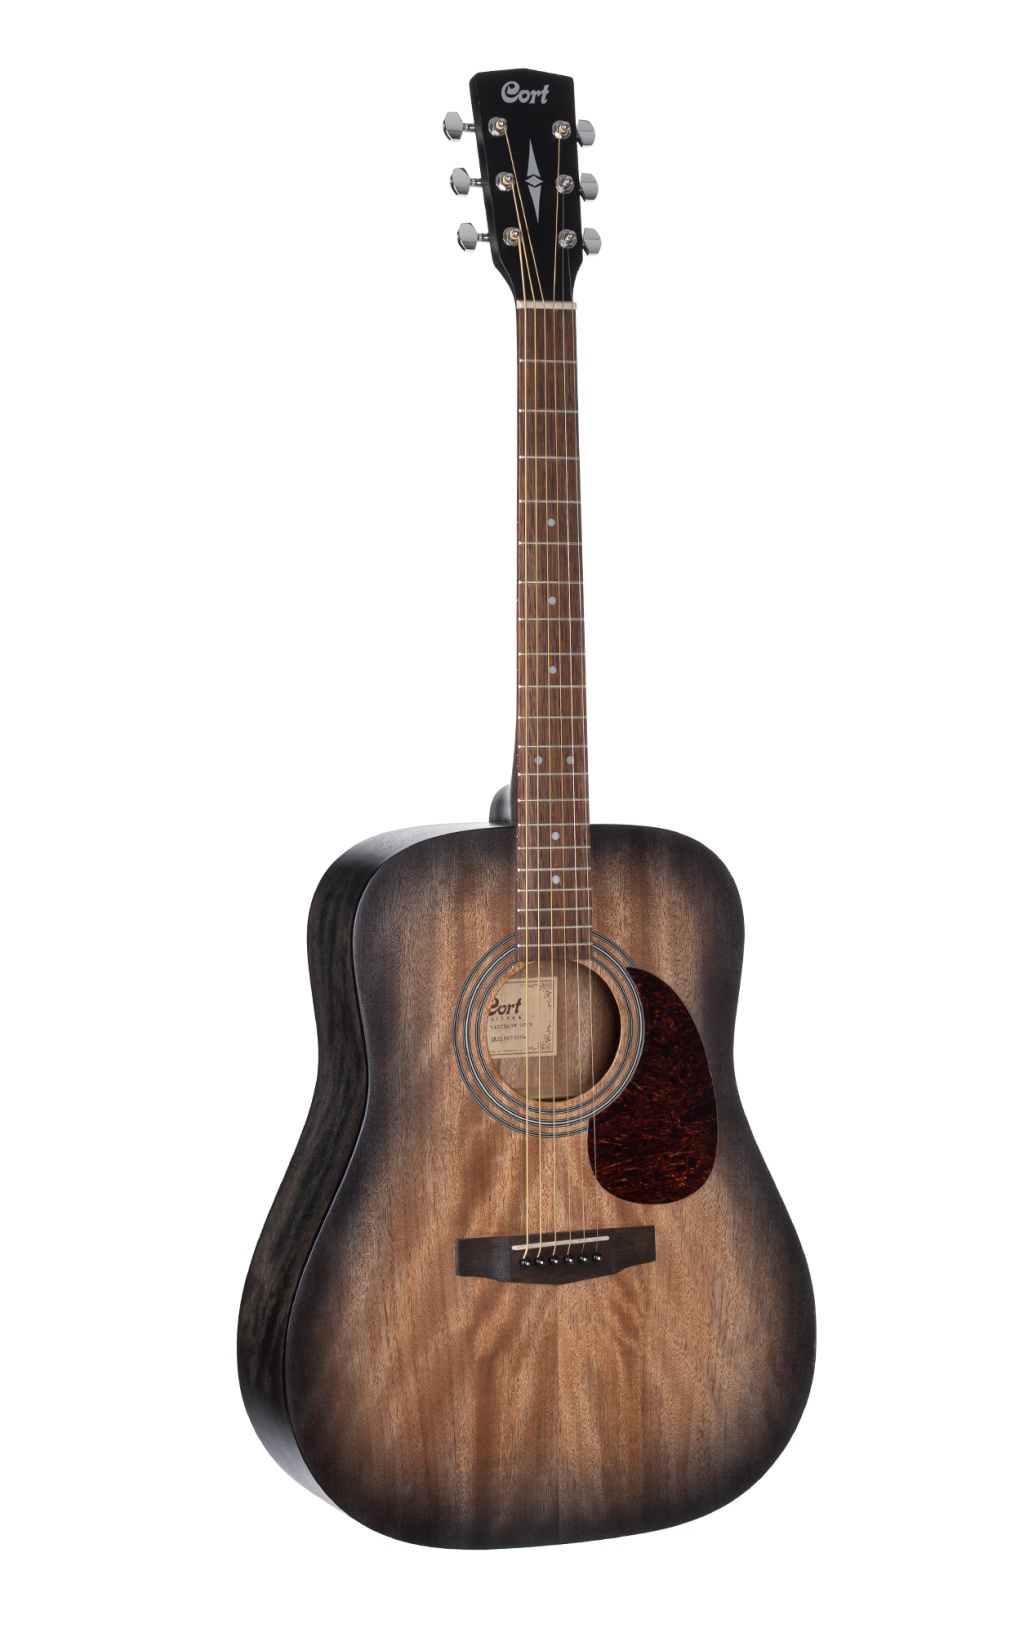 Earth60M-WBAG-OPTB Earth Series Акустическая гитара, черный санберст, с чехлом